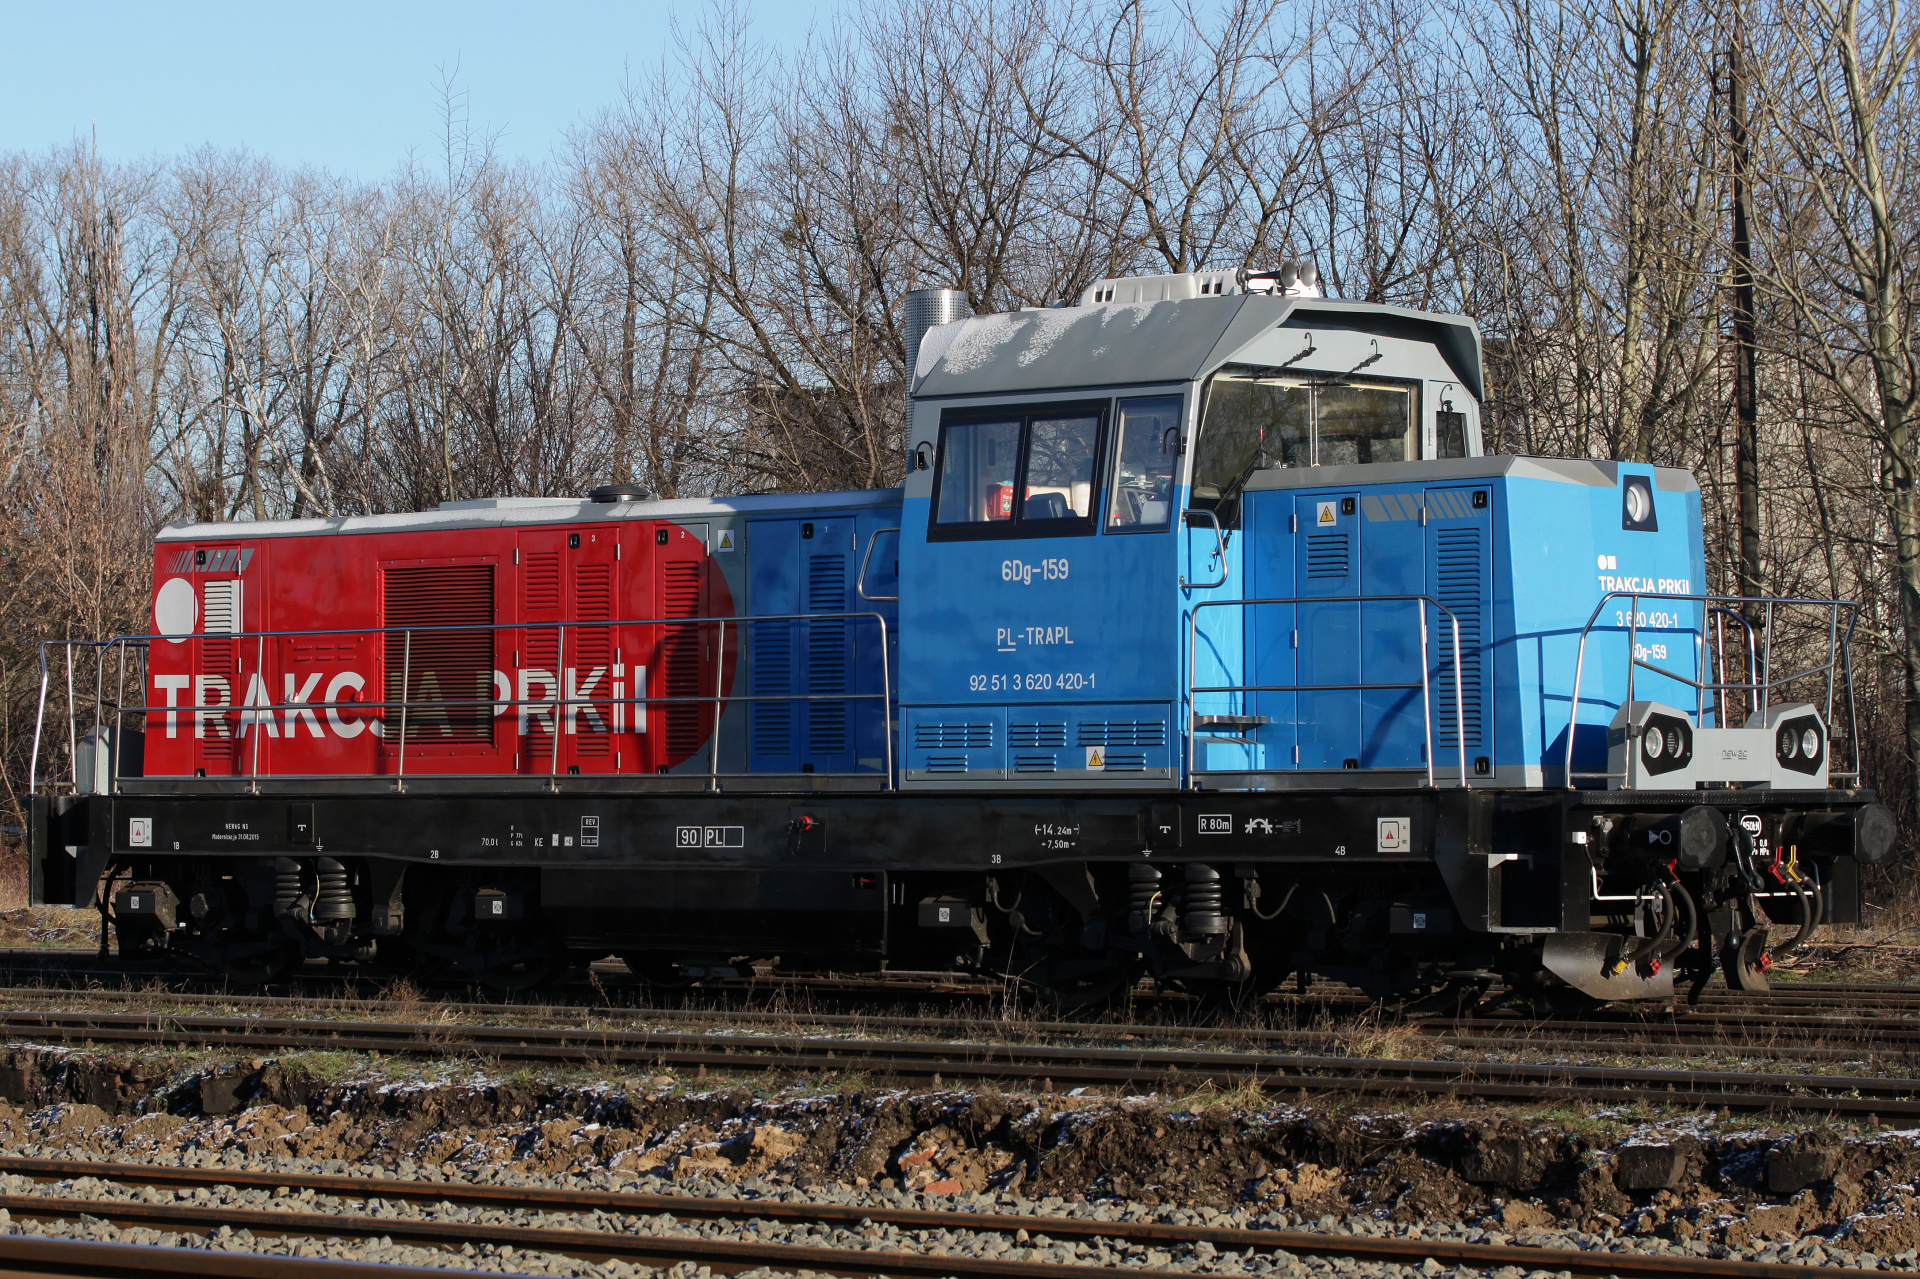 Newag 6Dg-159 (Vehicles » Trains and Locomotives)